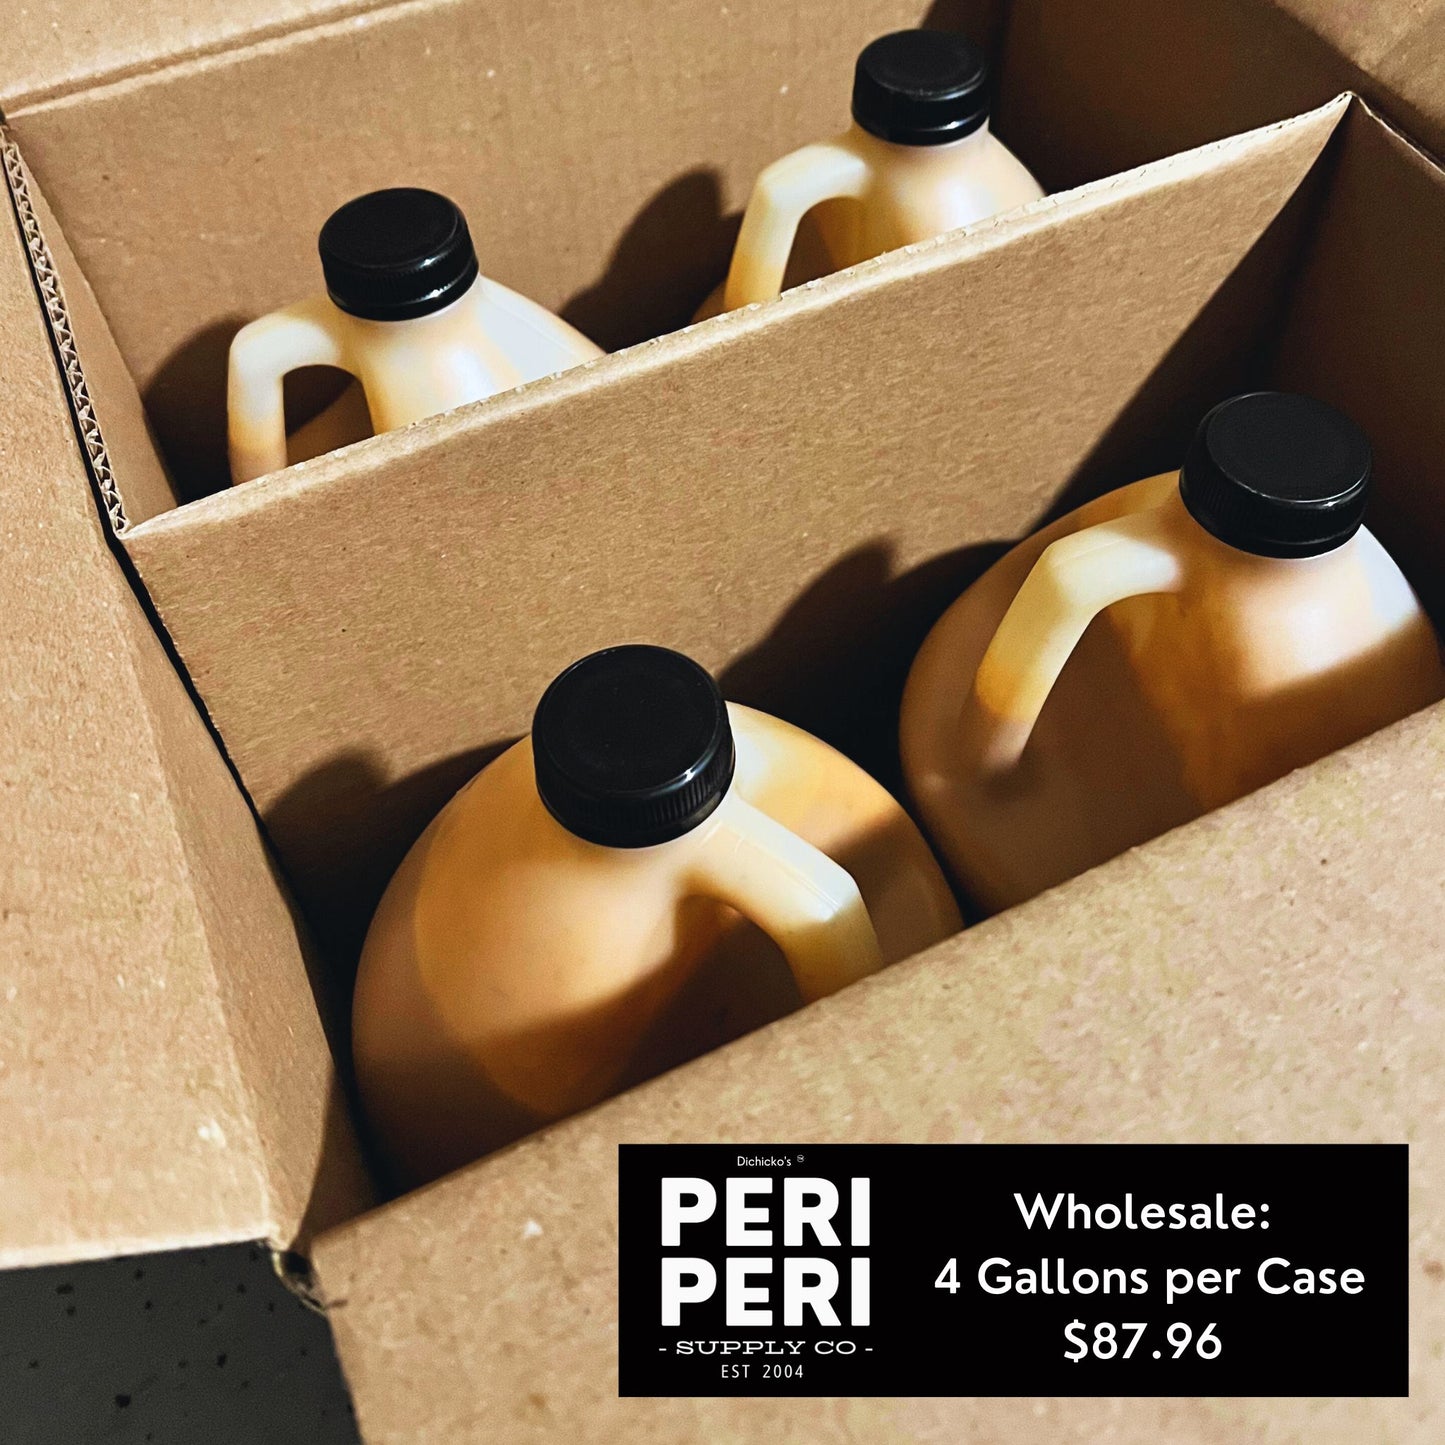 Hot Peri Peri sauce - The standard Peri Peri - Wholesale 4 Gallons per case, Vegan, Gluten Free, Sugar Free, Made in America, Keto and Paleo Friendly